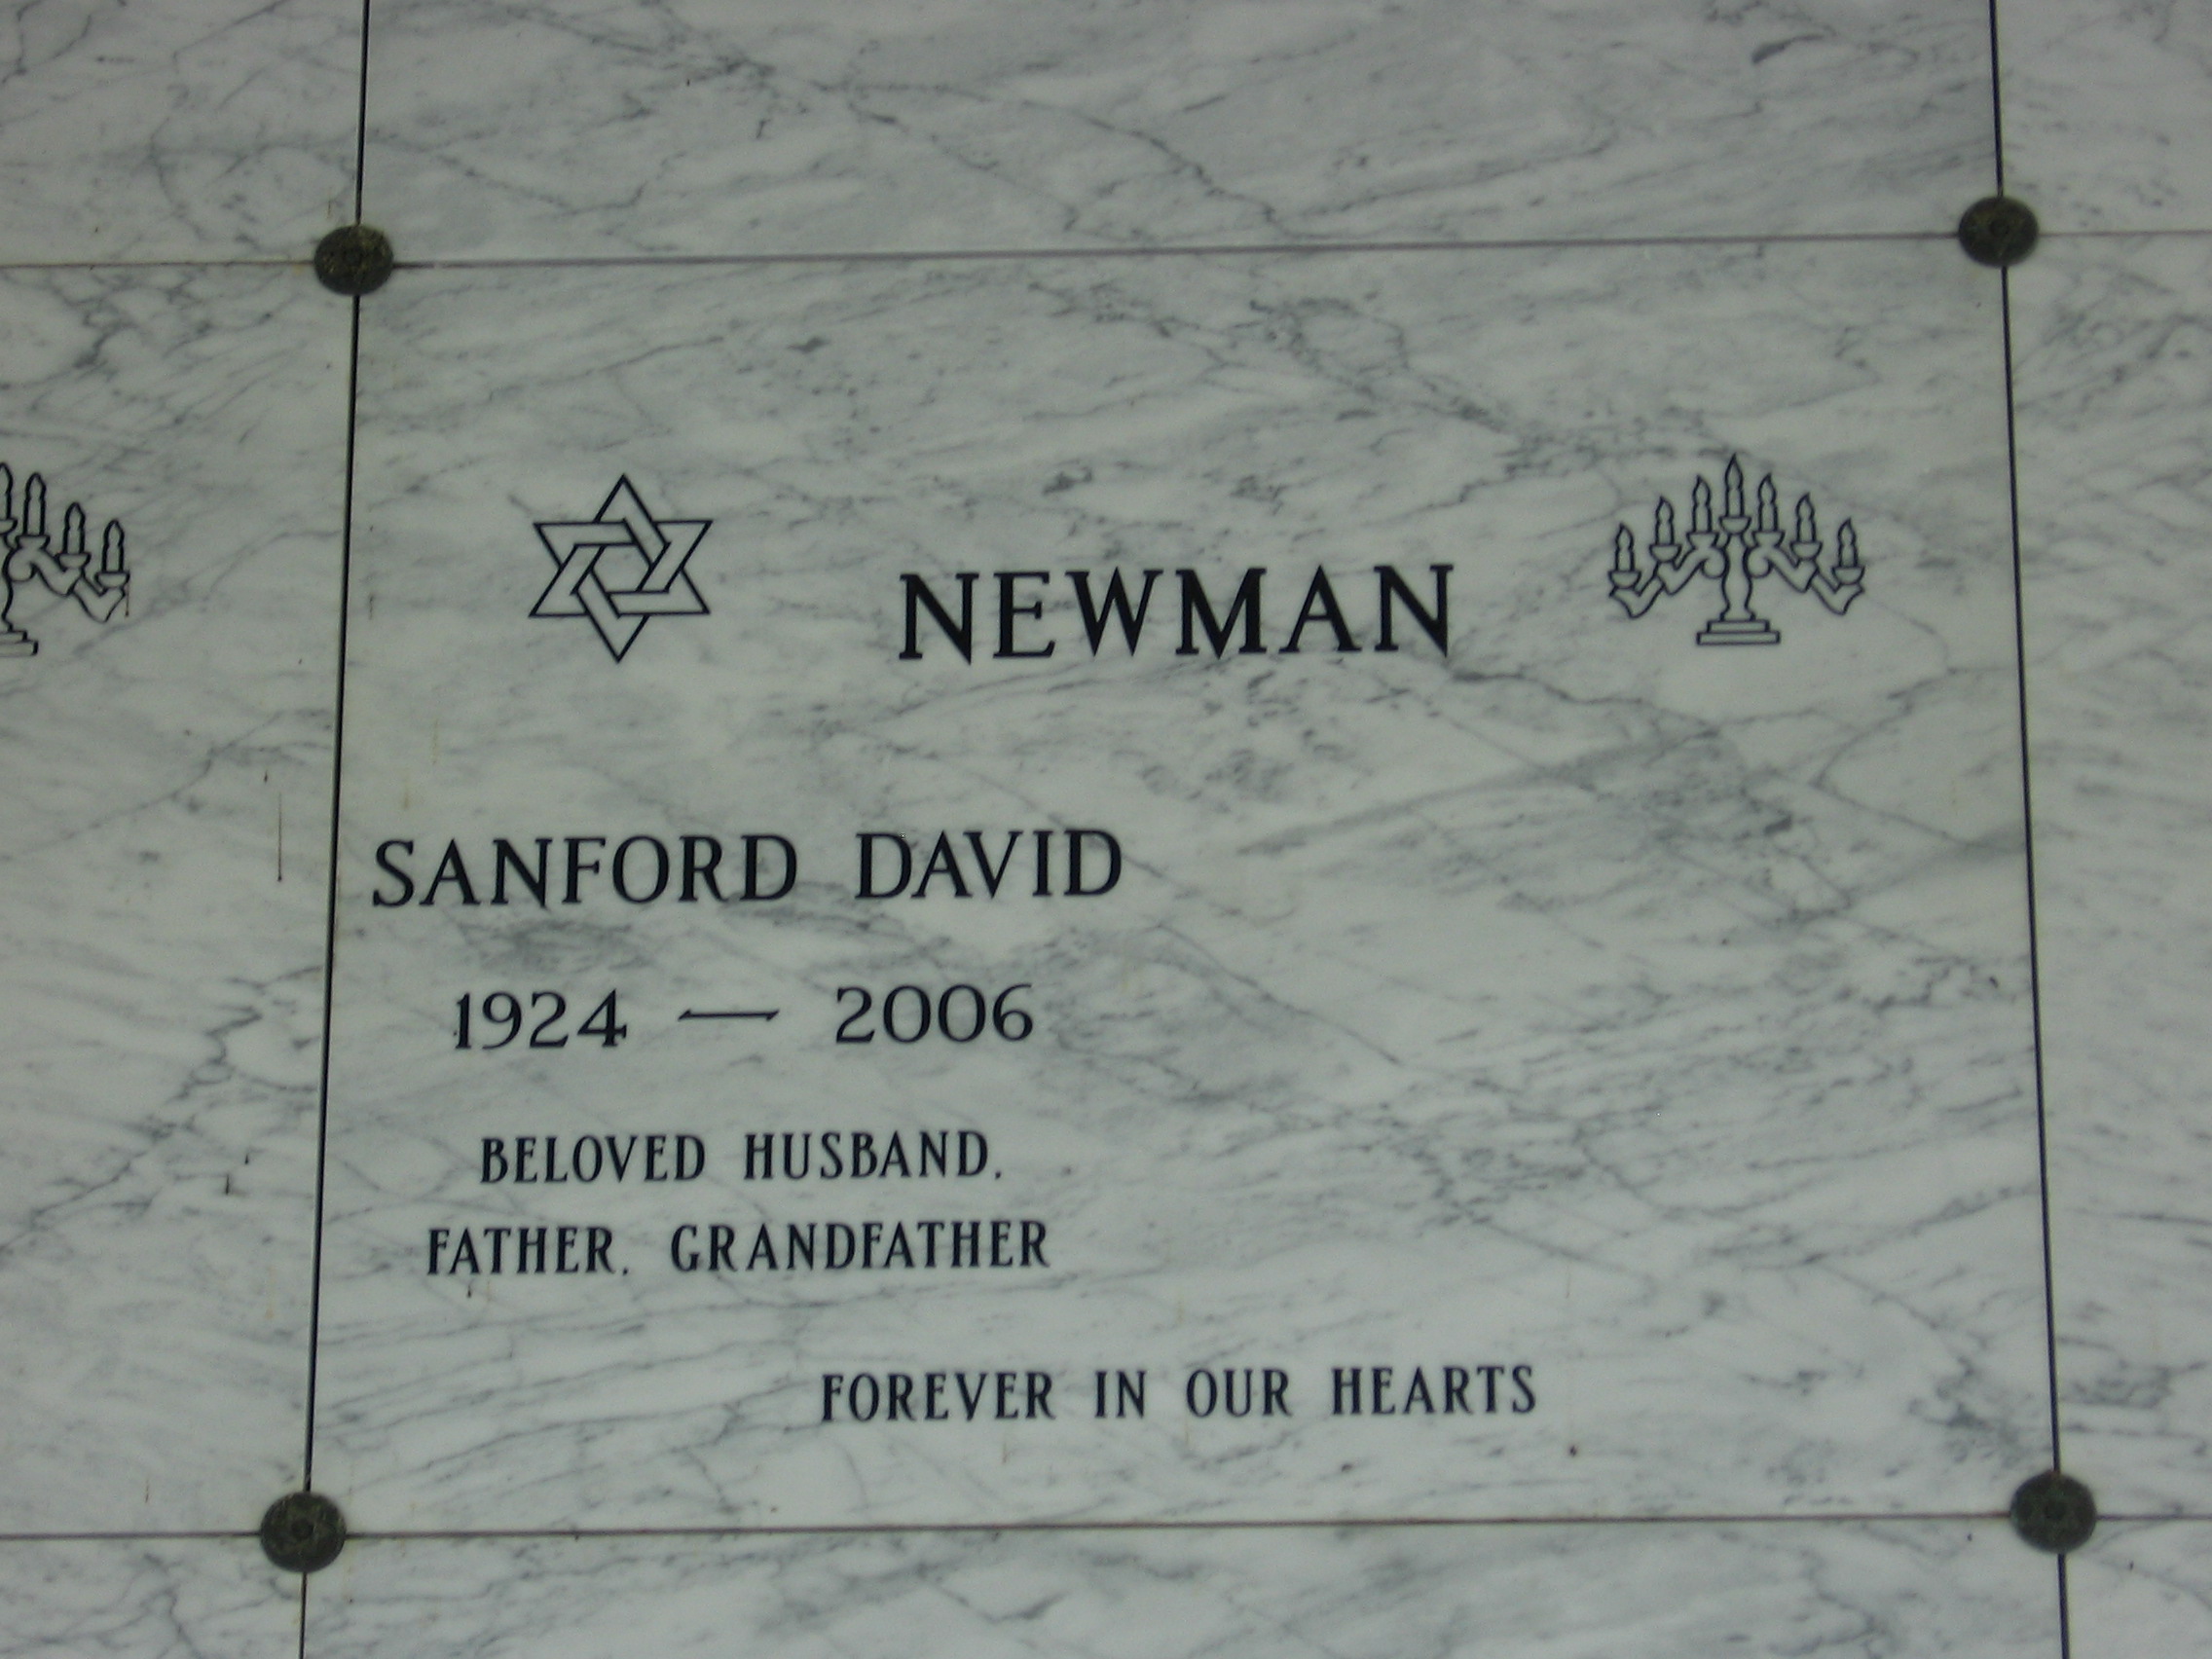 Sanford David Newman